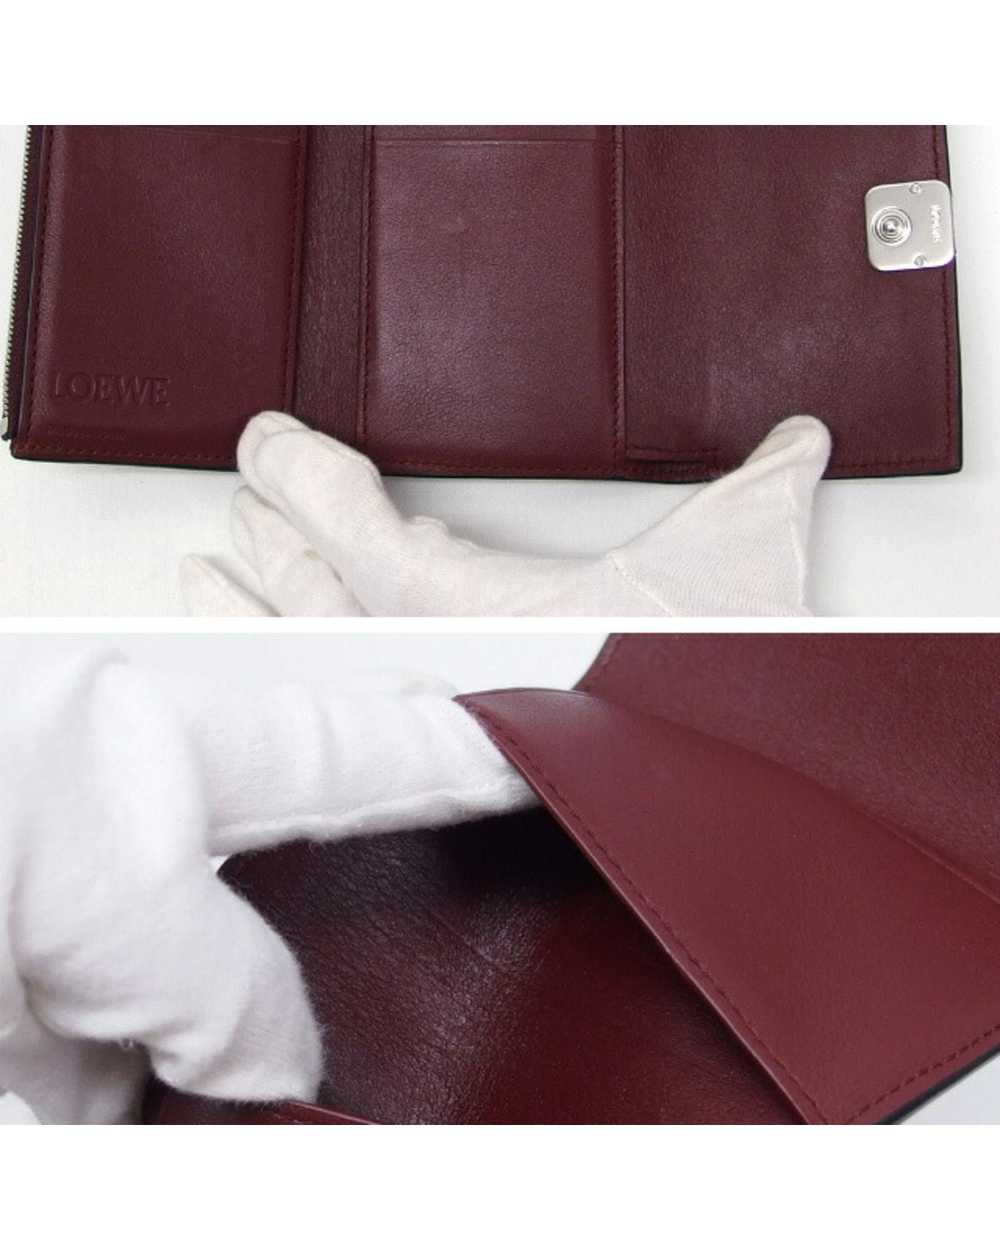 Loewe Leather Tri-Fold Wallet with Loewe Logo - image 6